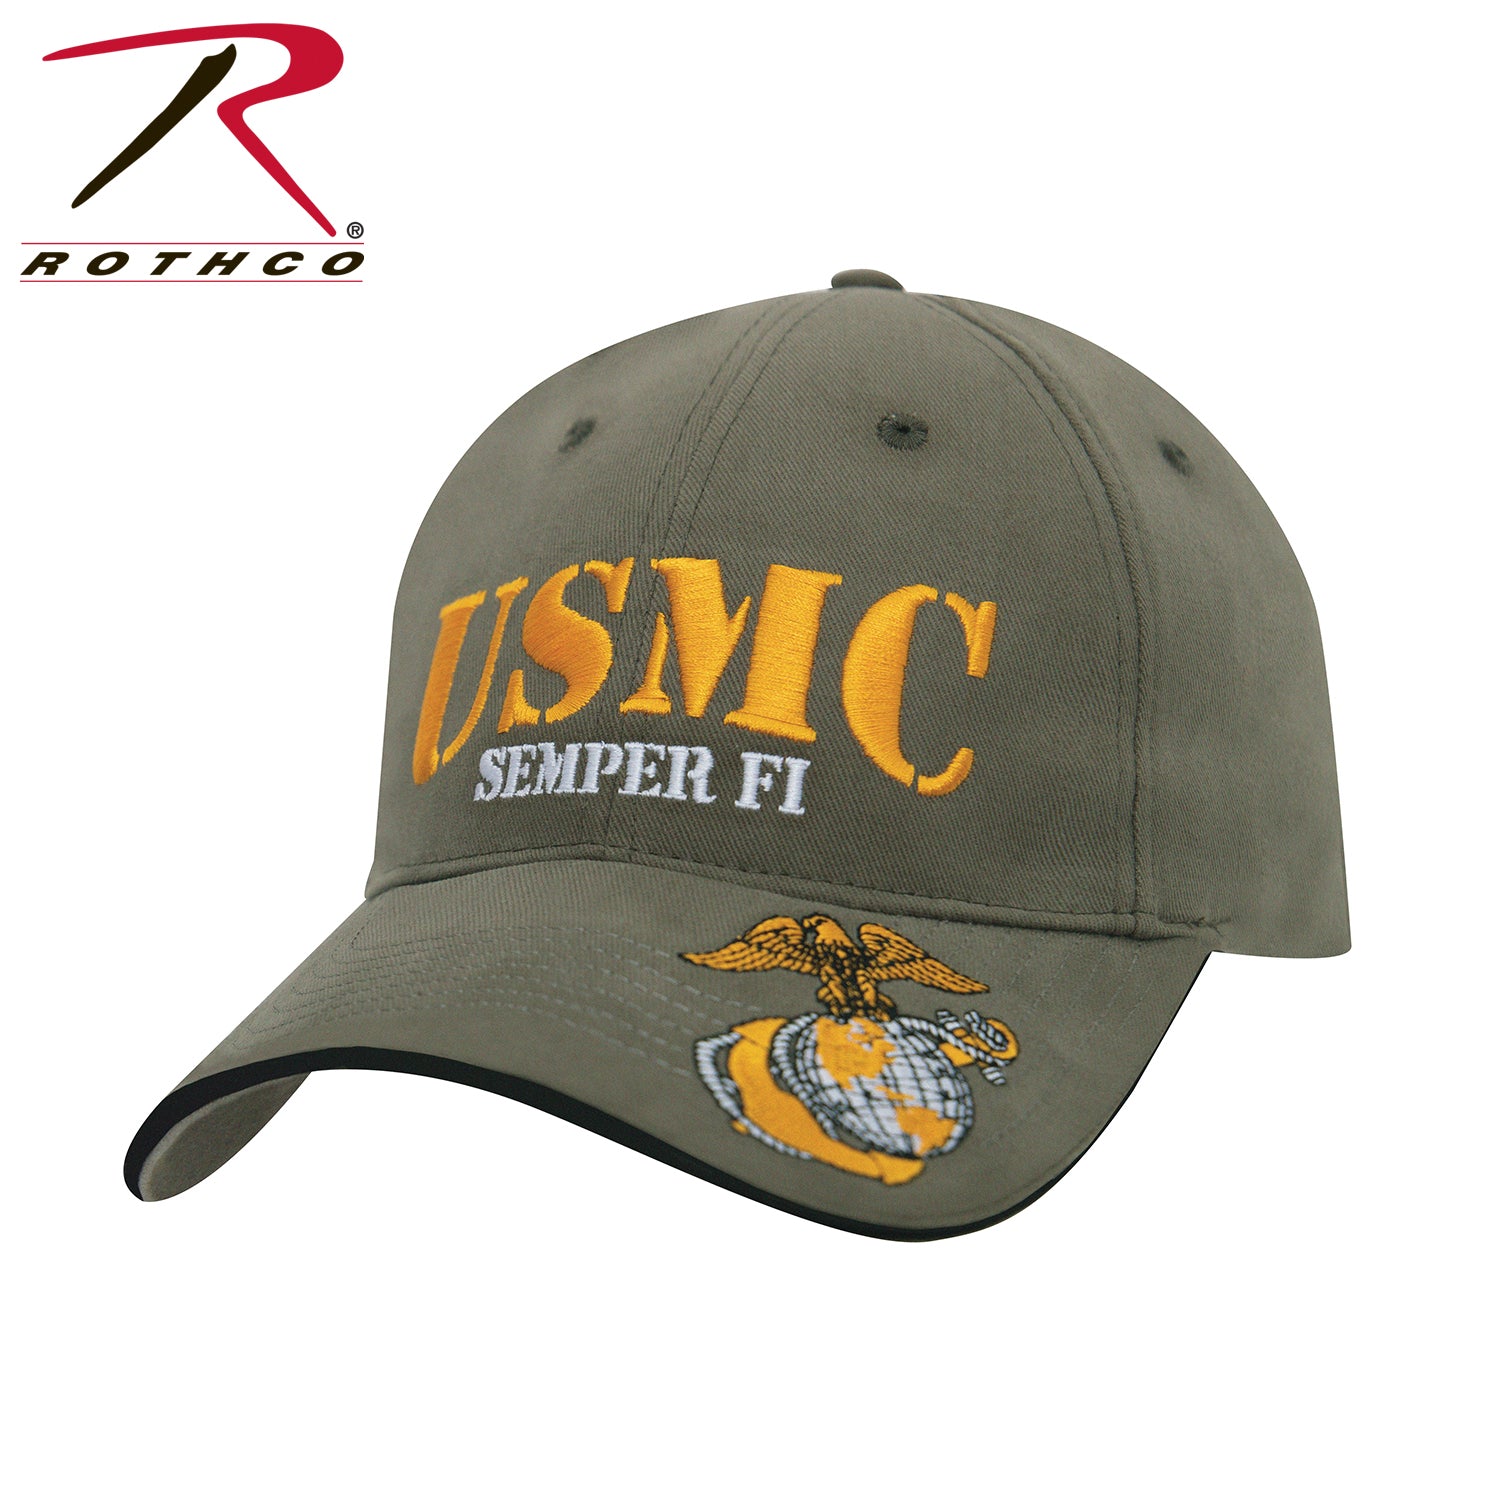 Rothco USMC Semper Fi Low Profile Cap - Tactical Choice Plus